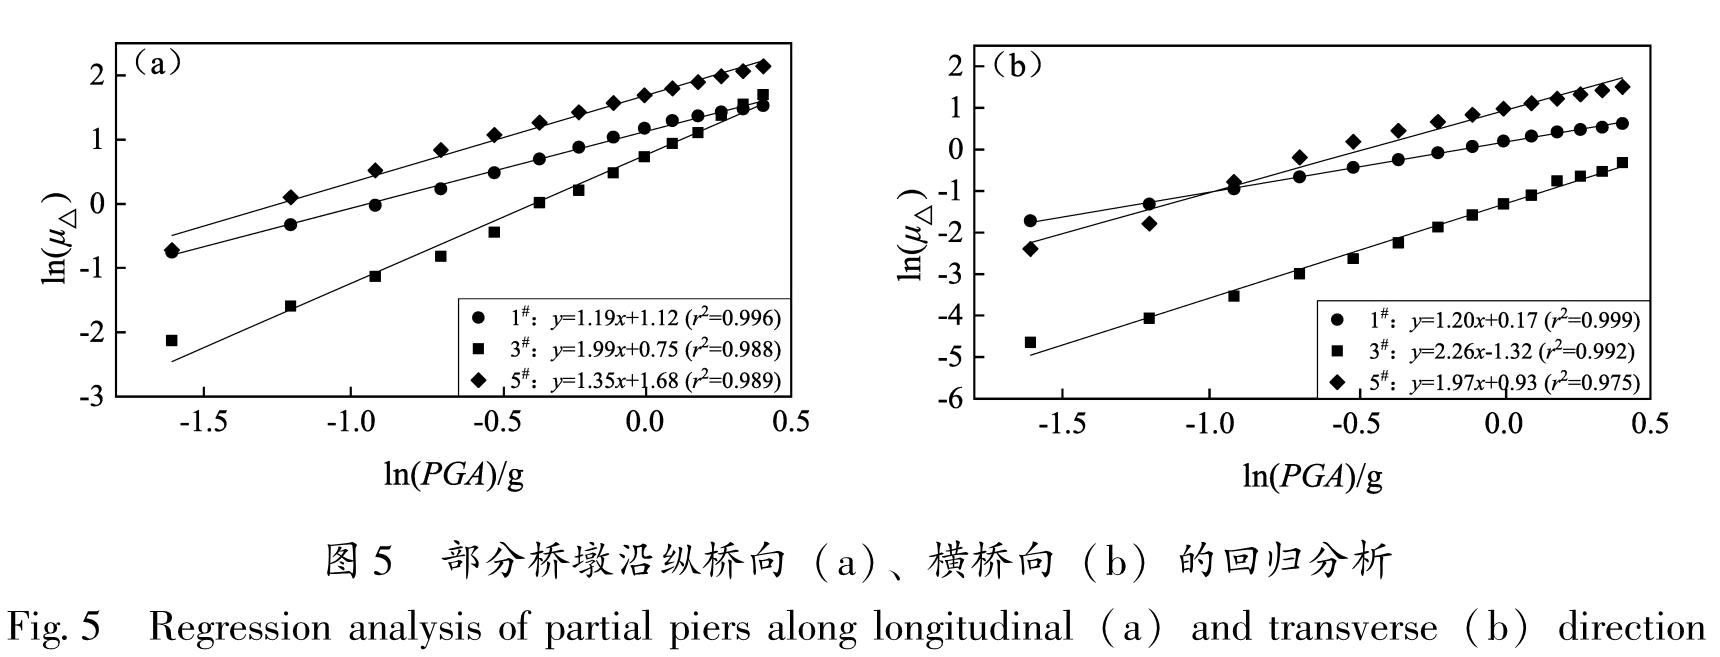 图5 部分桥墩沿纵桥向(a)、横桥向(b)的回归分析<br/>Fig.5 Regression analysis of partial piers along longitudinal(a)and transverse(b)direction